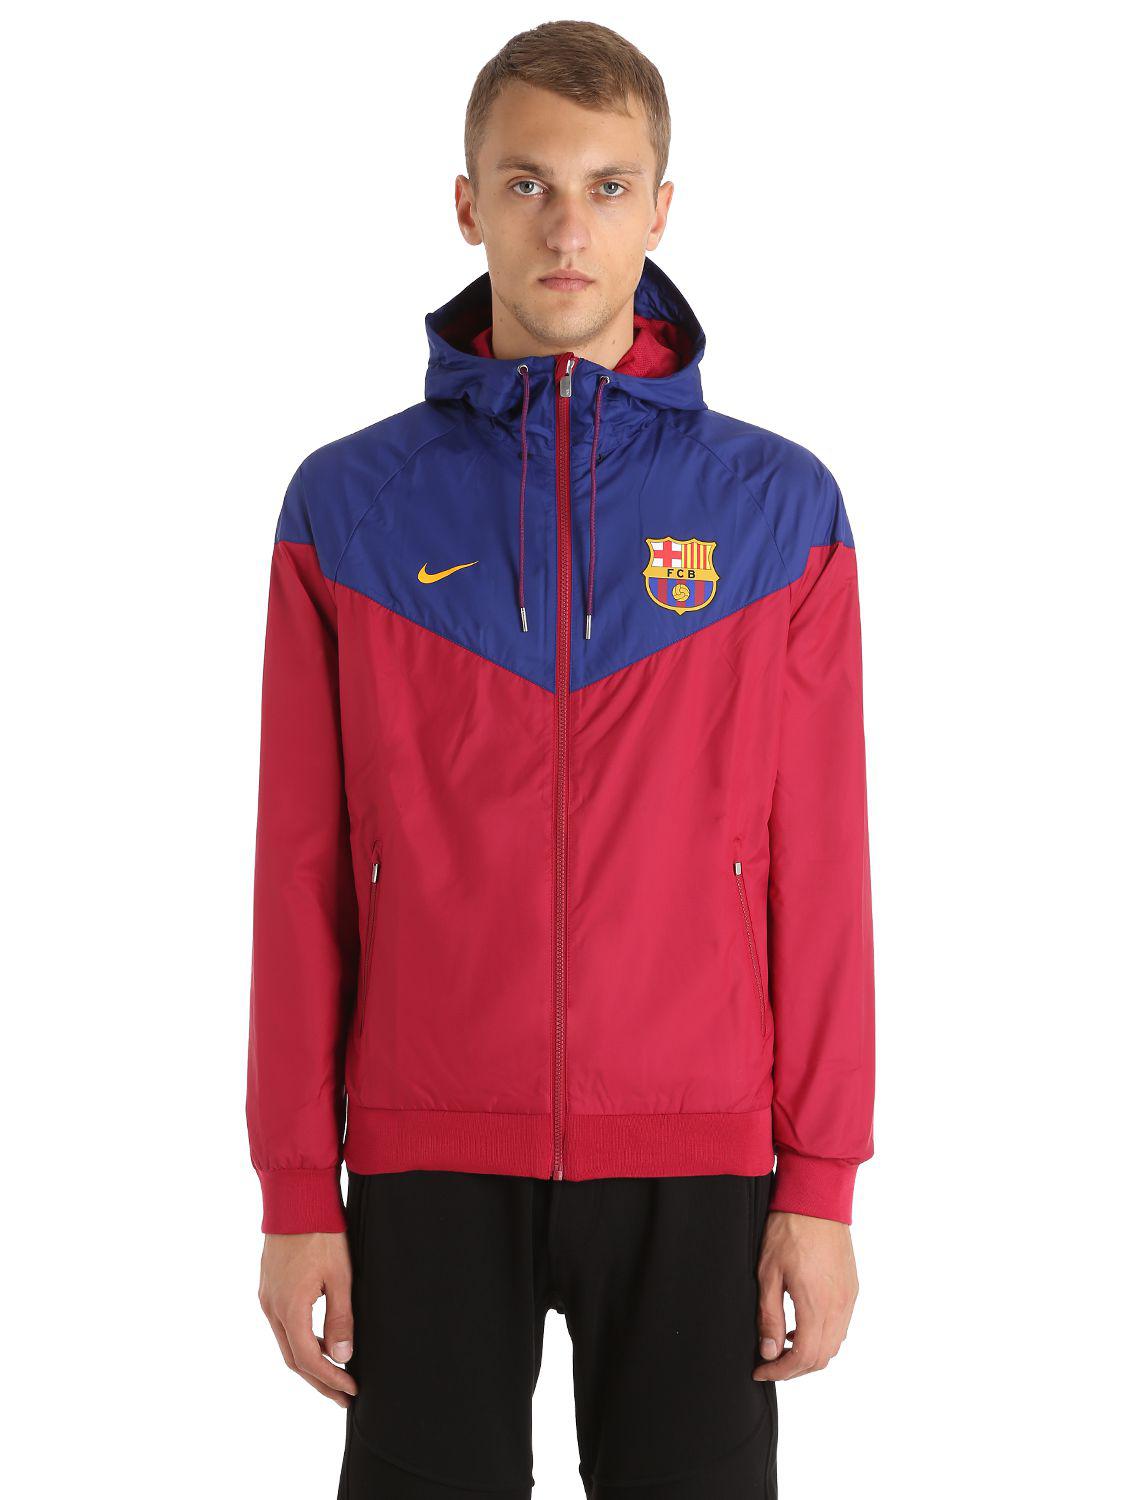 Ligatie Ooit opschorten Nike Fc Barcelona Windrunner Jacket for Men | Lyst